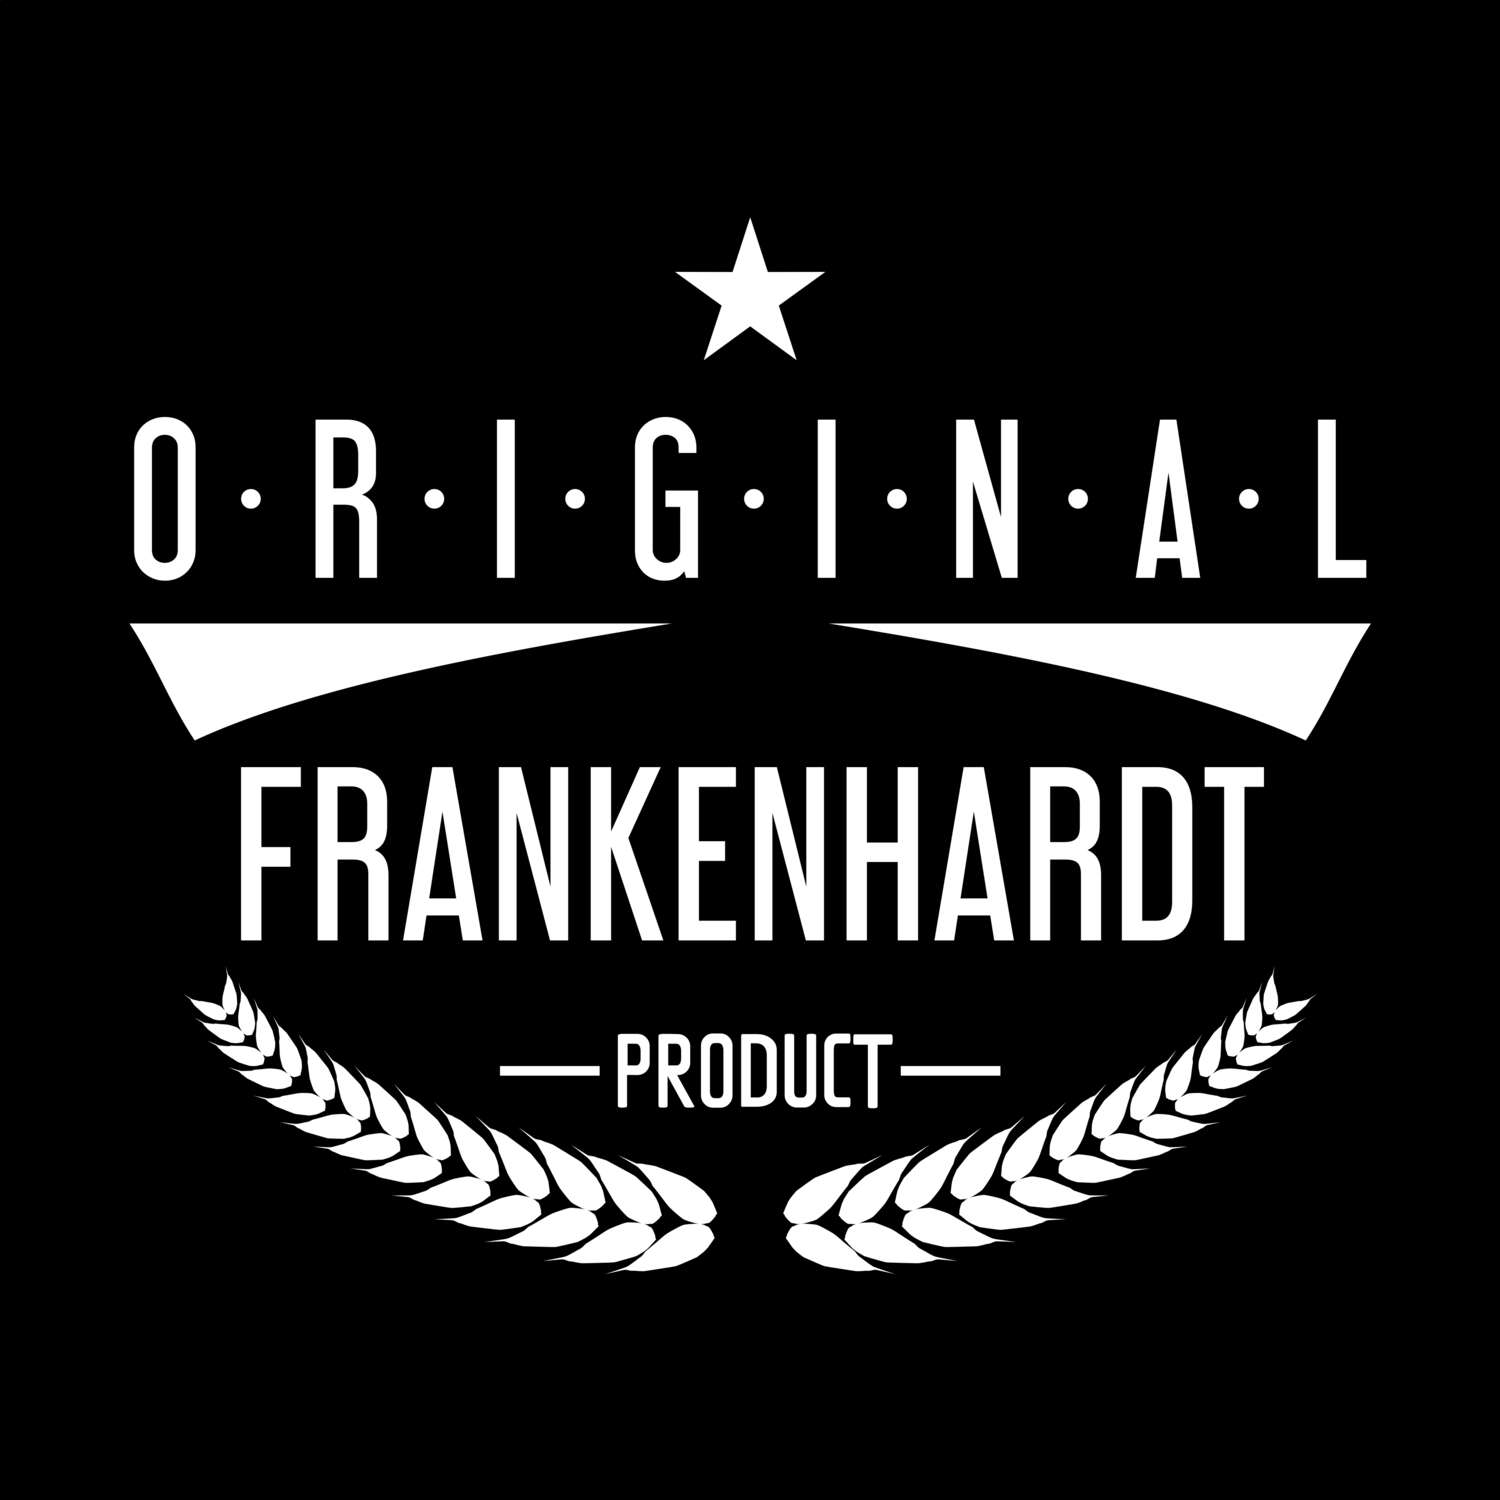 Frankenhardt T-Shirt »Original Product«